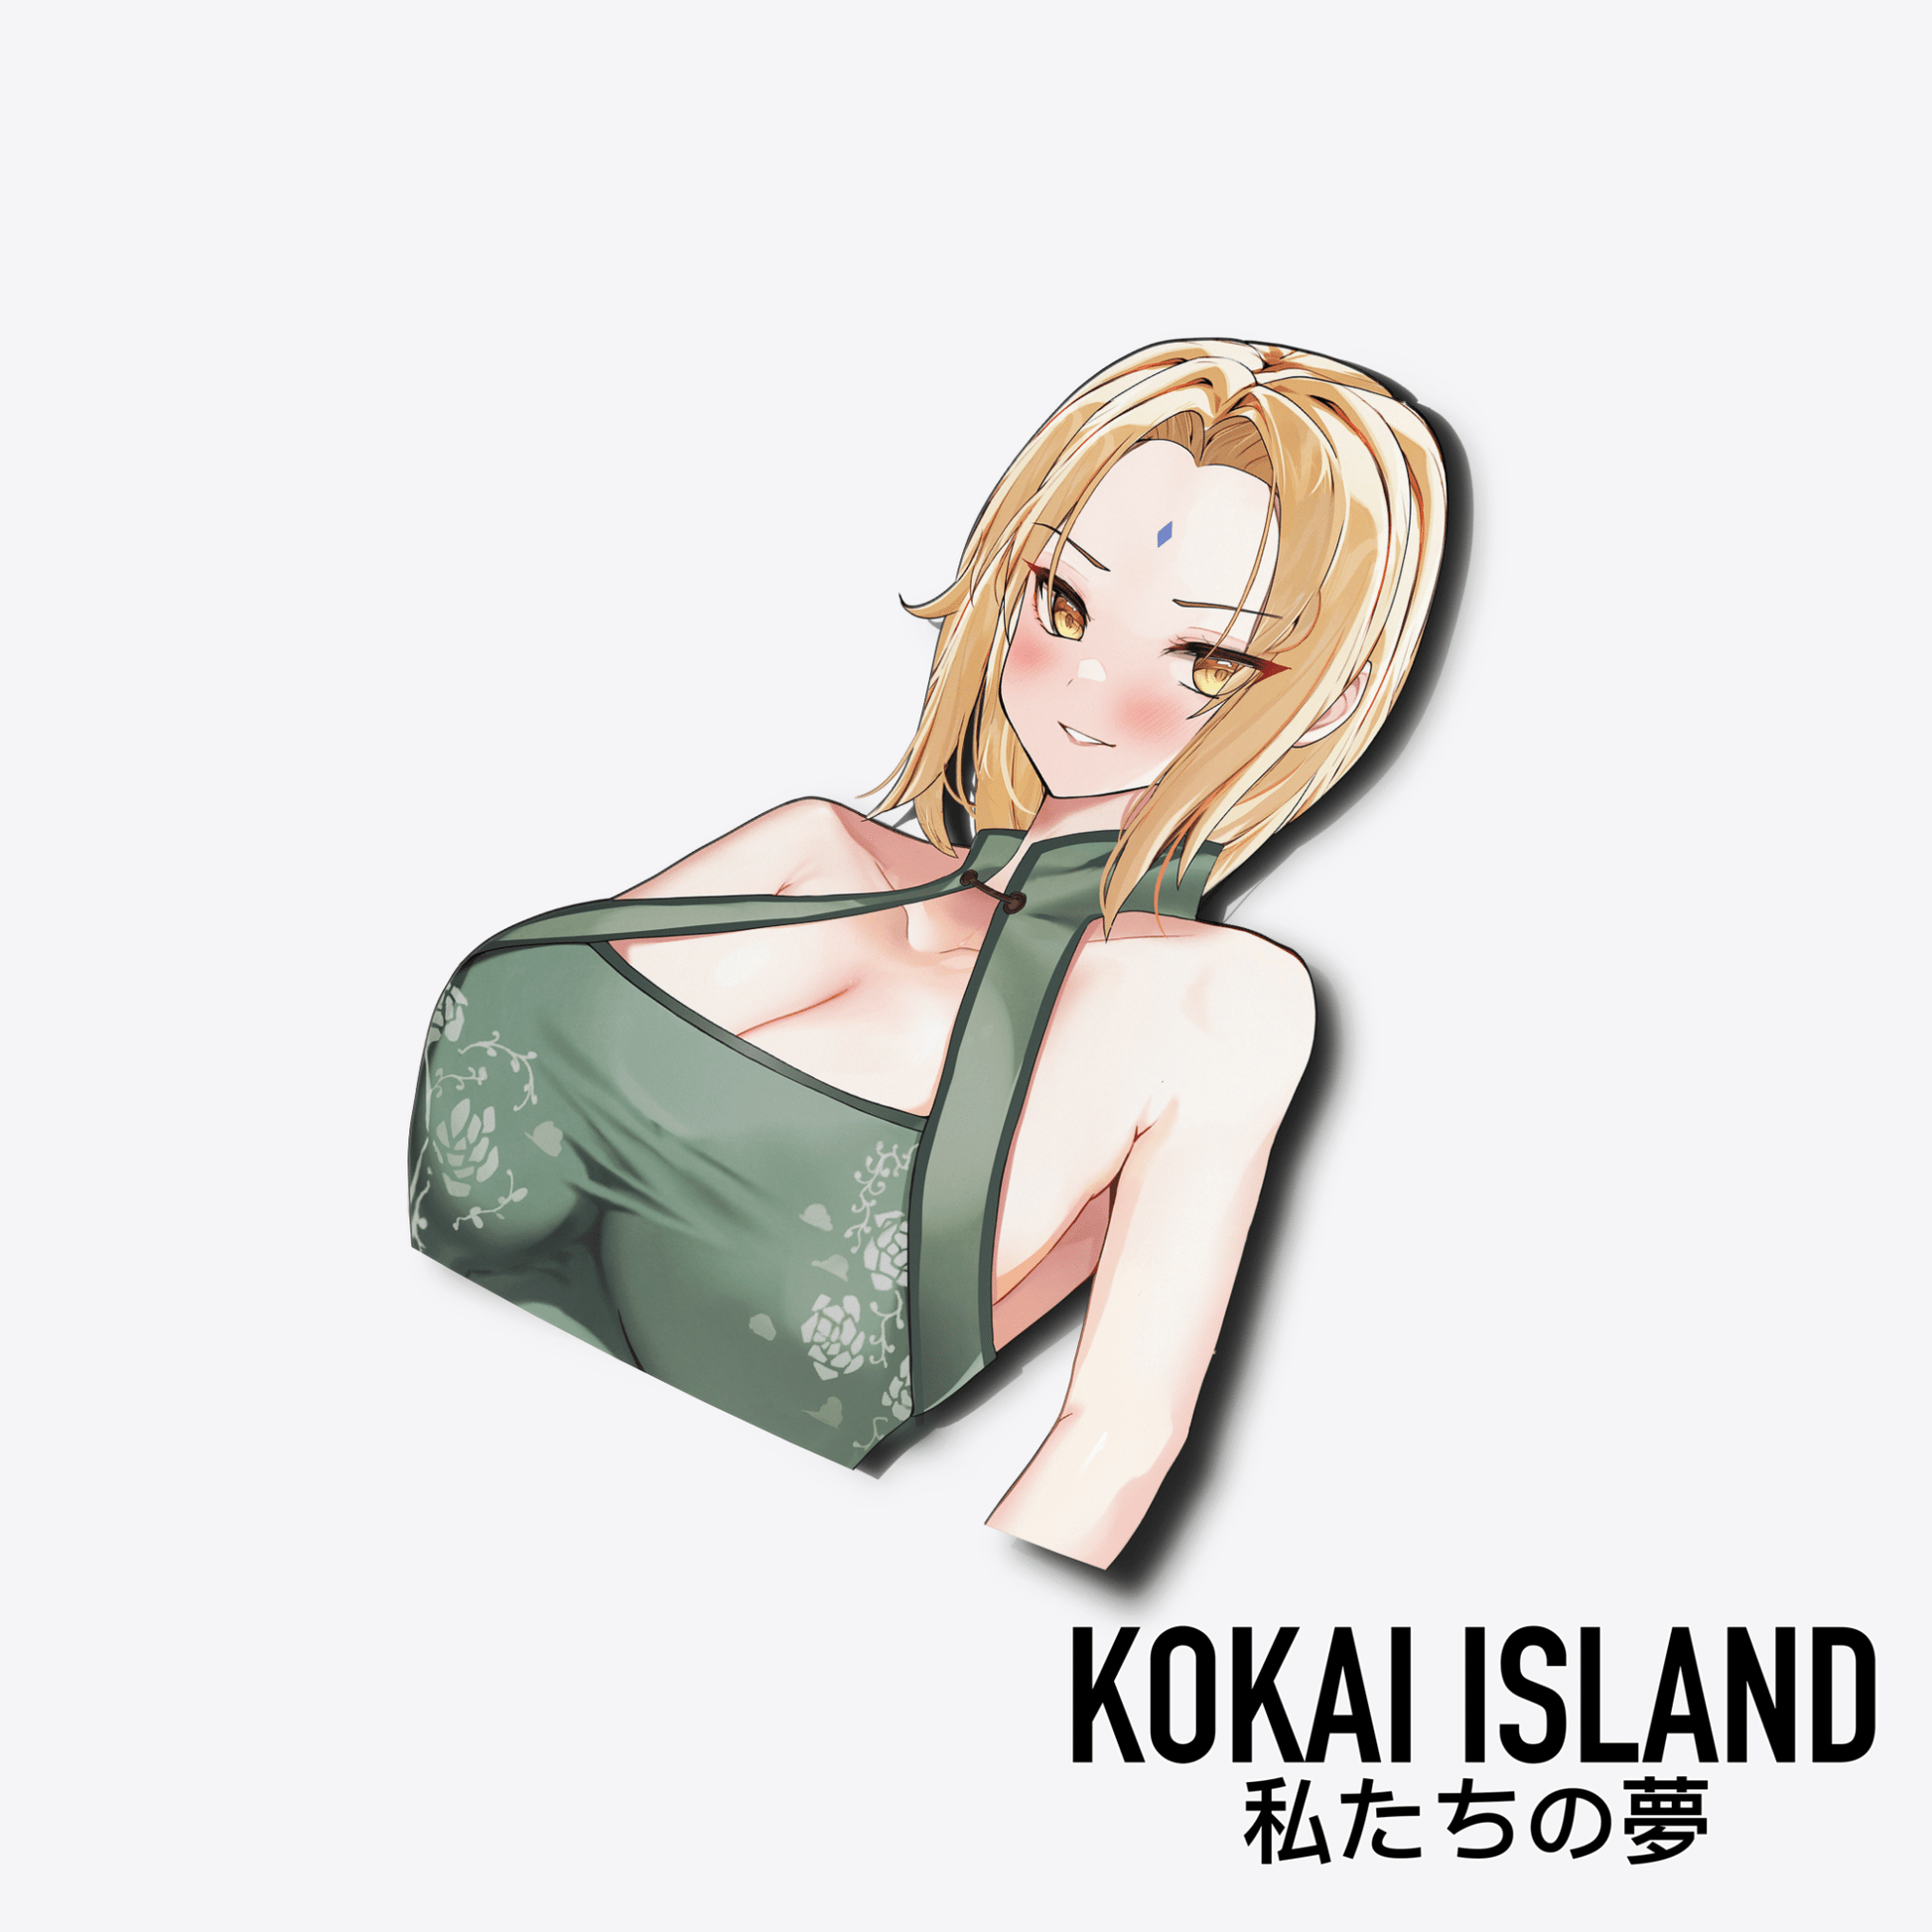 Tsunade DecalDecalKokai Island